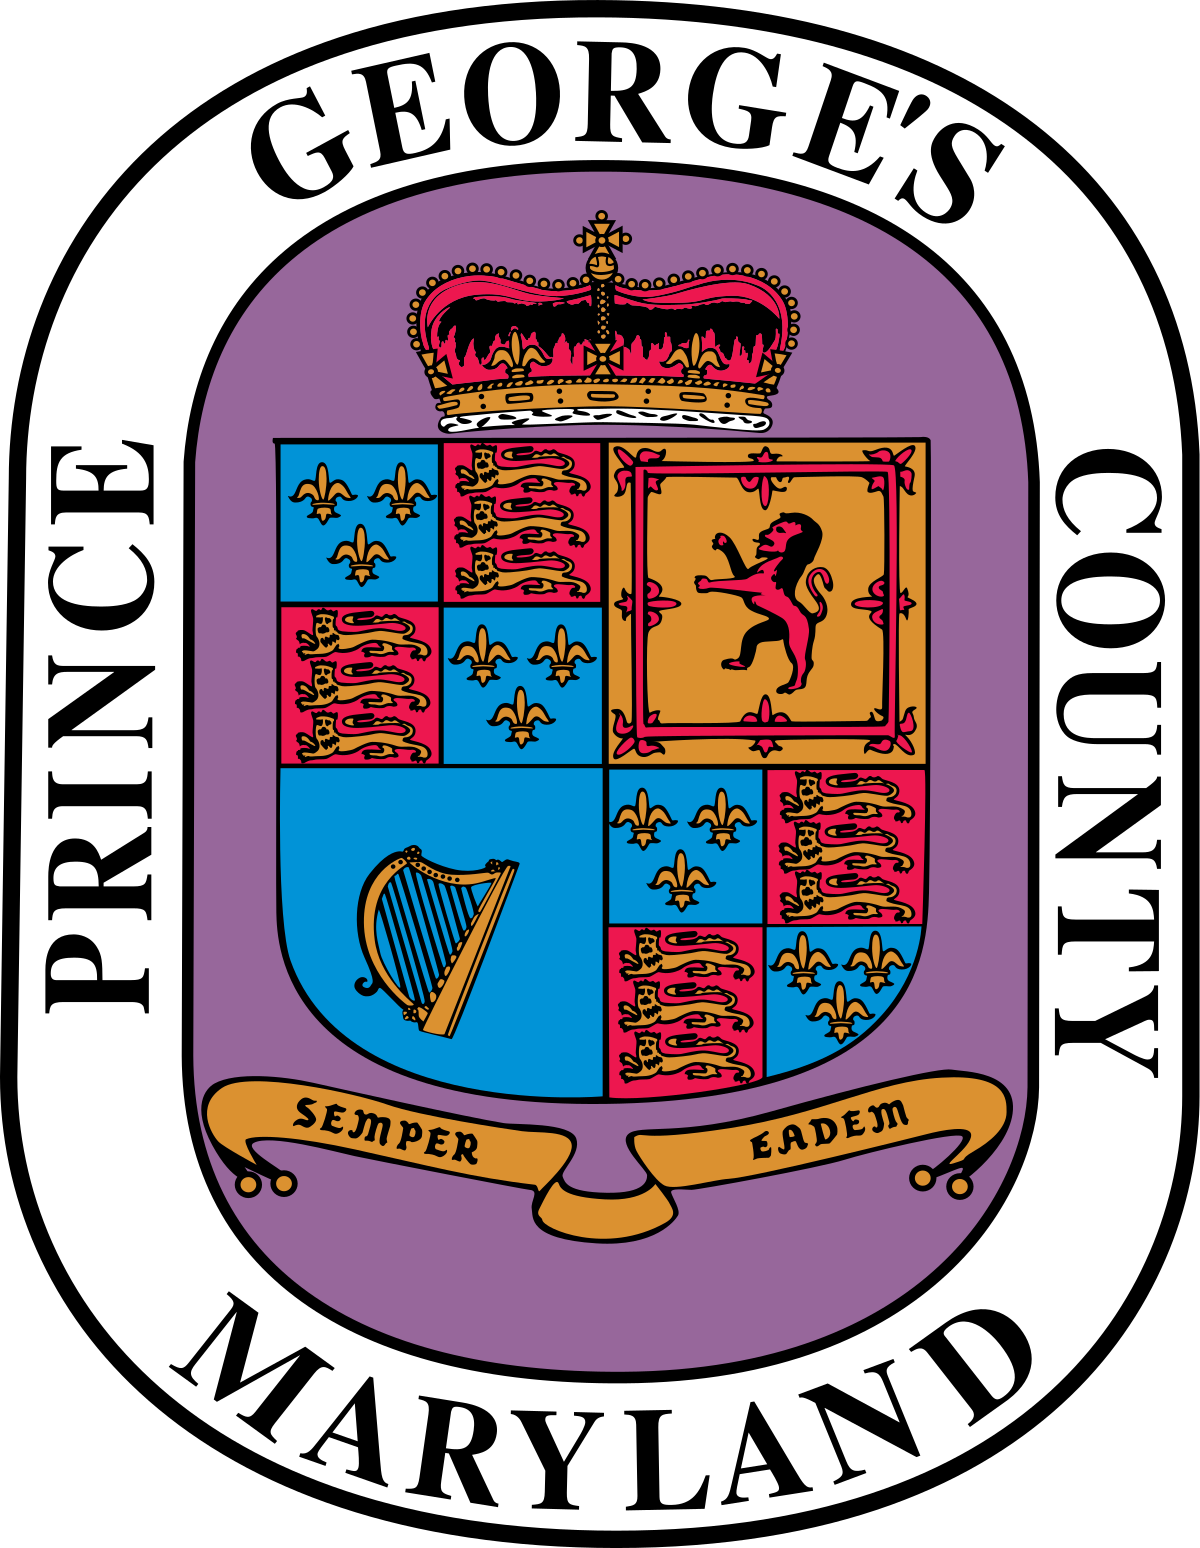 Prince George's County seal 